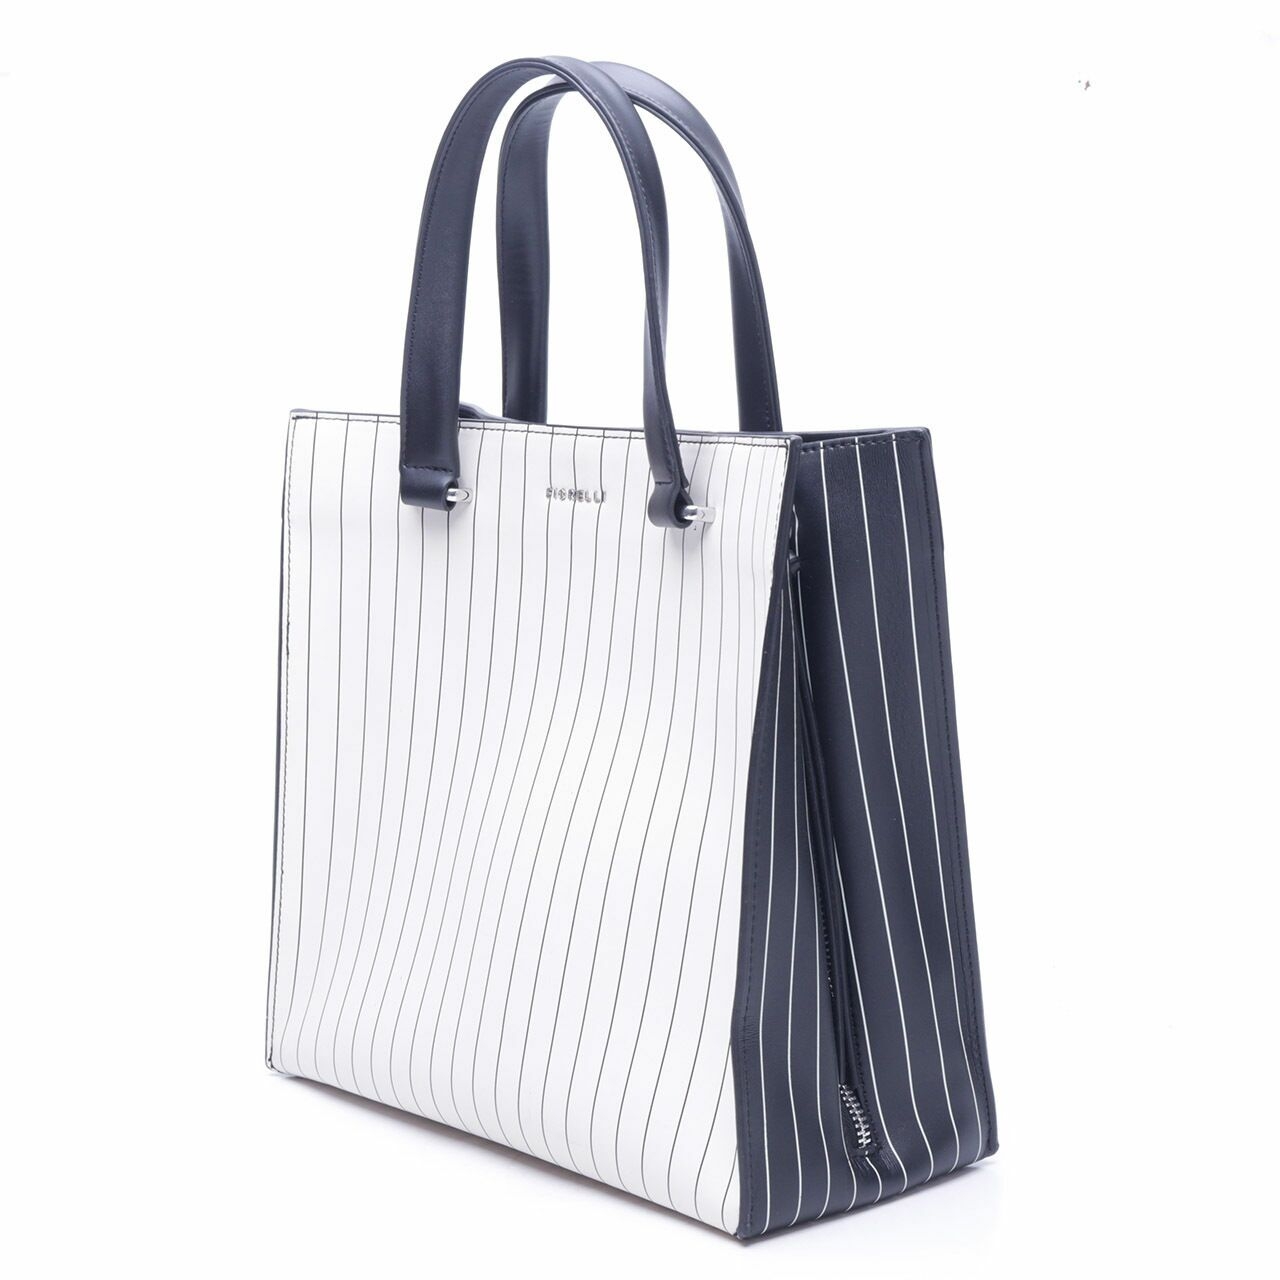 FIORELLI Black & White Stripes Tote Bag